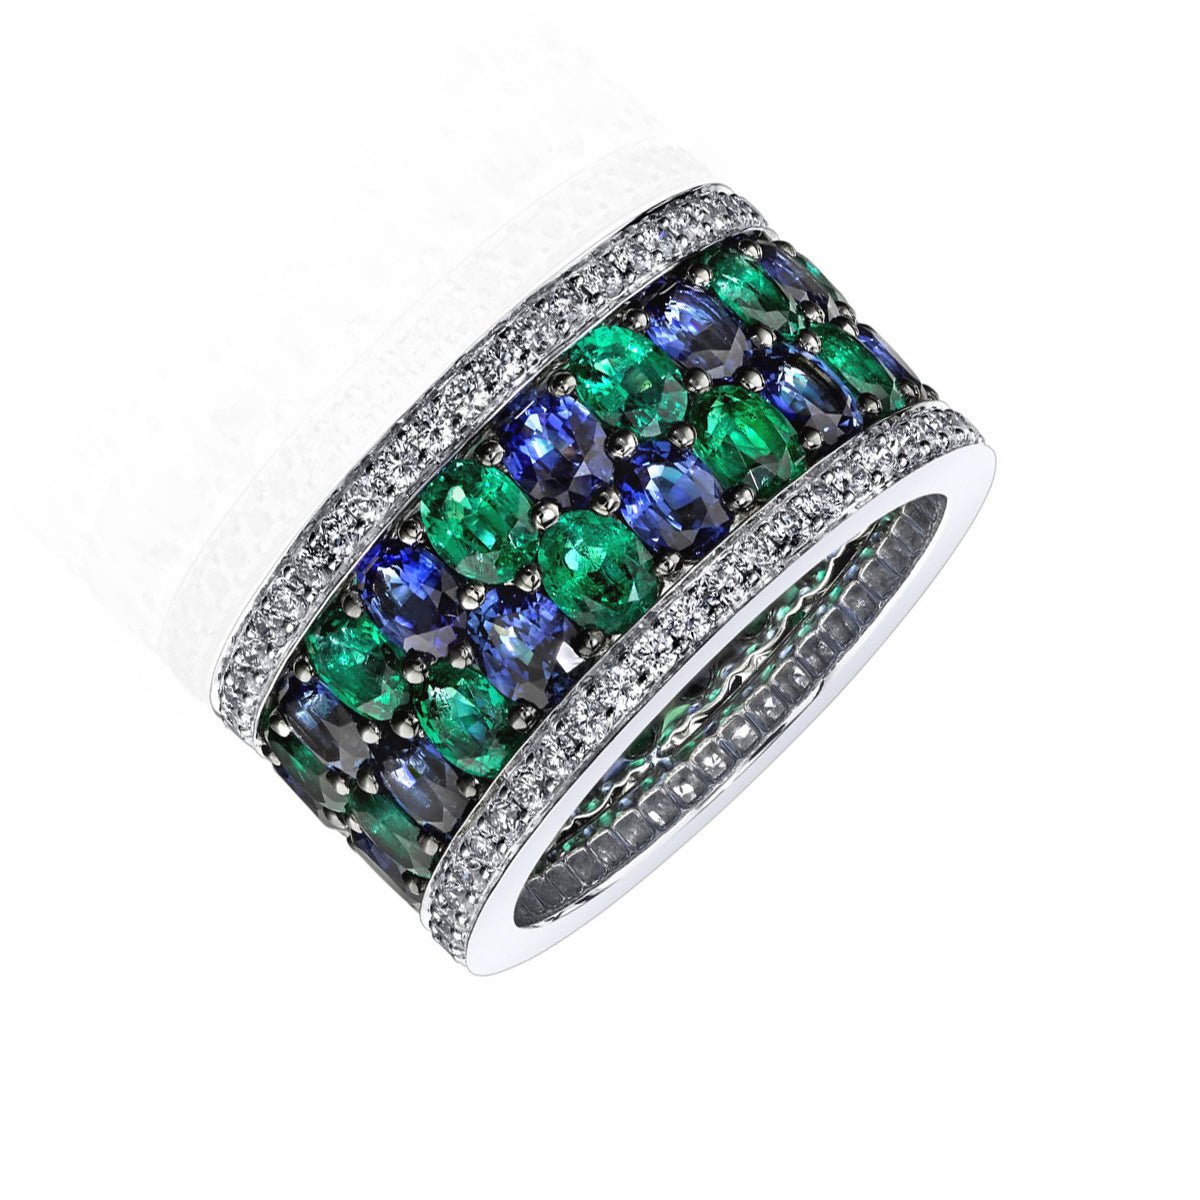 Robert Procop - Emerald Sapphire American Glamour Ring